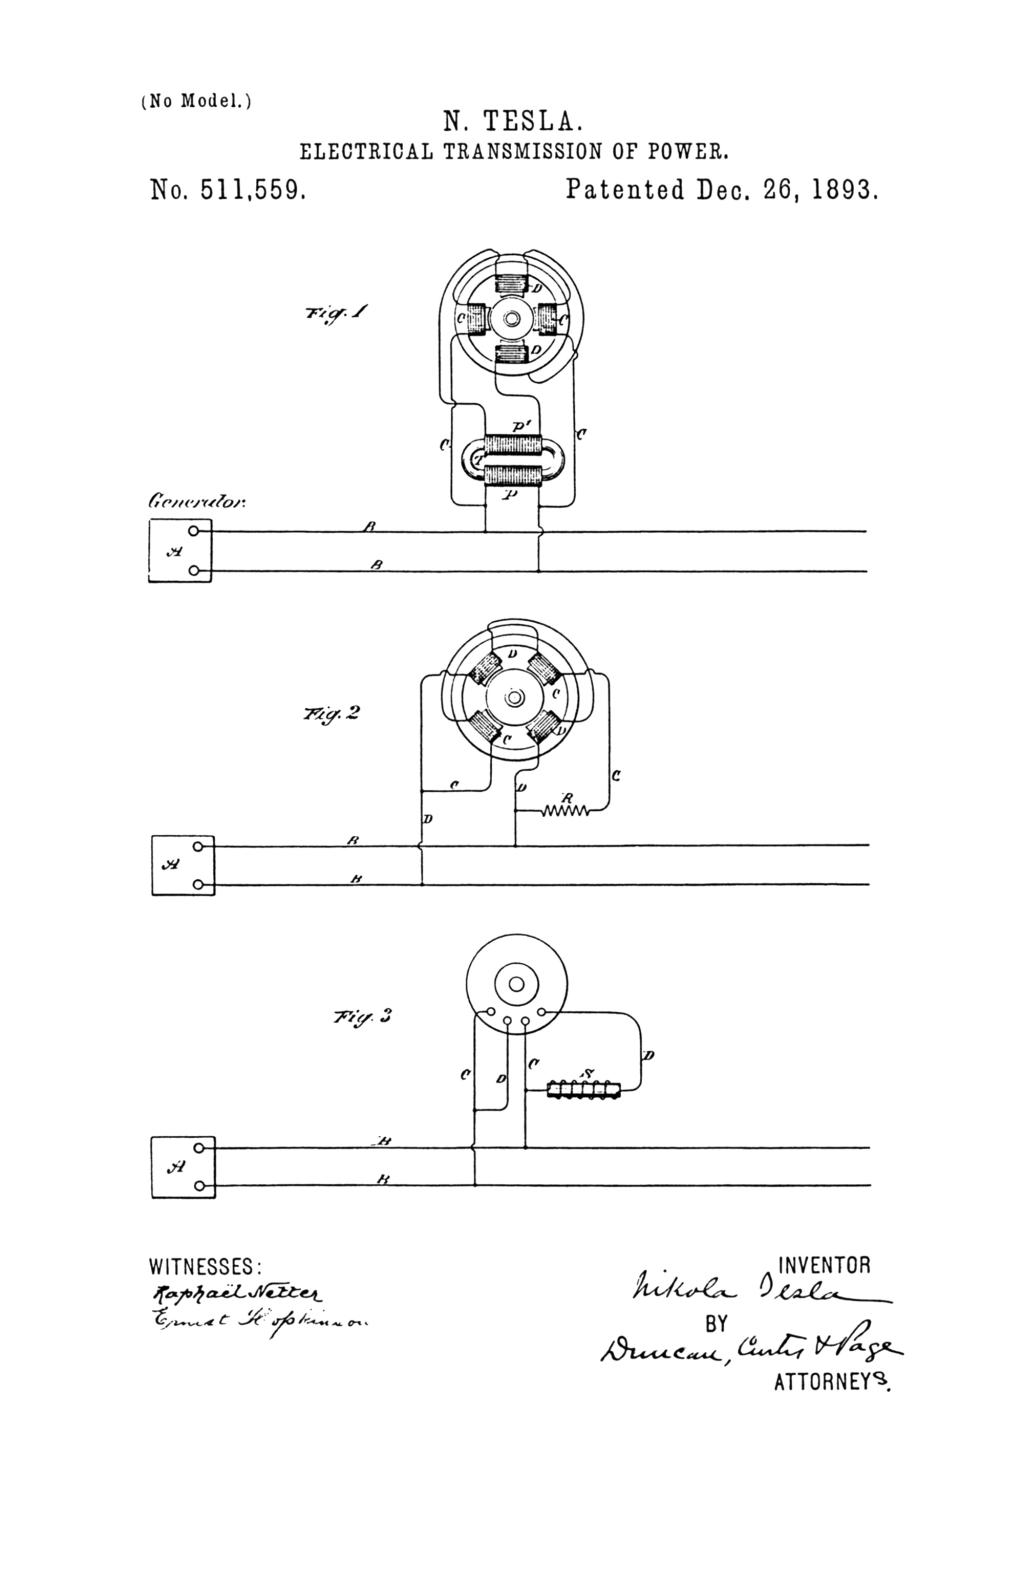 Nikola Tesla U.S. Patent 511,559 - Electrical Transmission of Power - Image 1